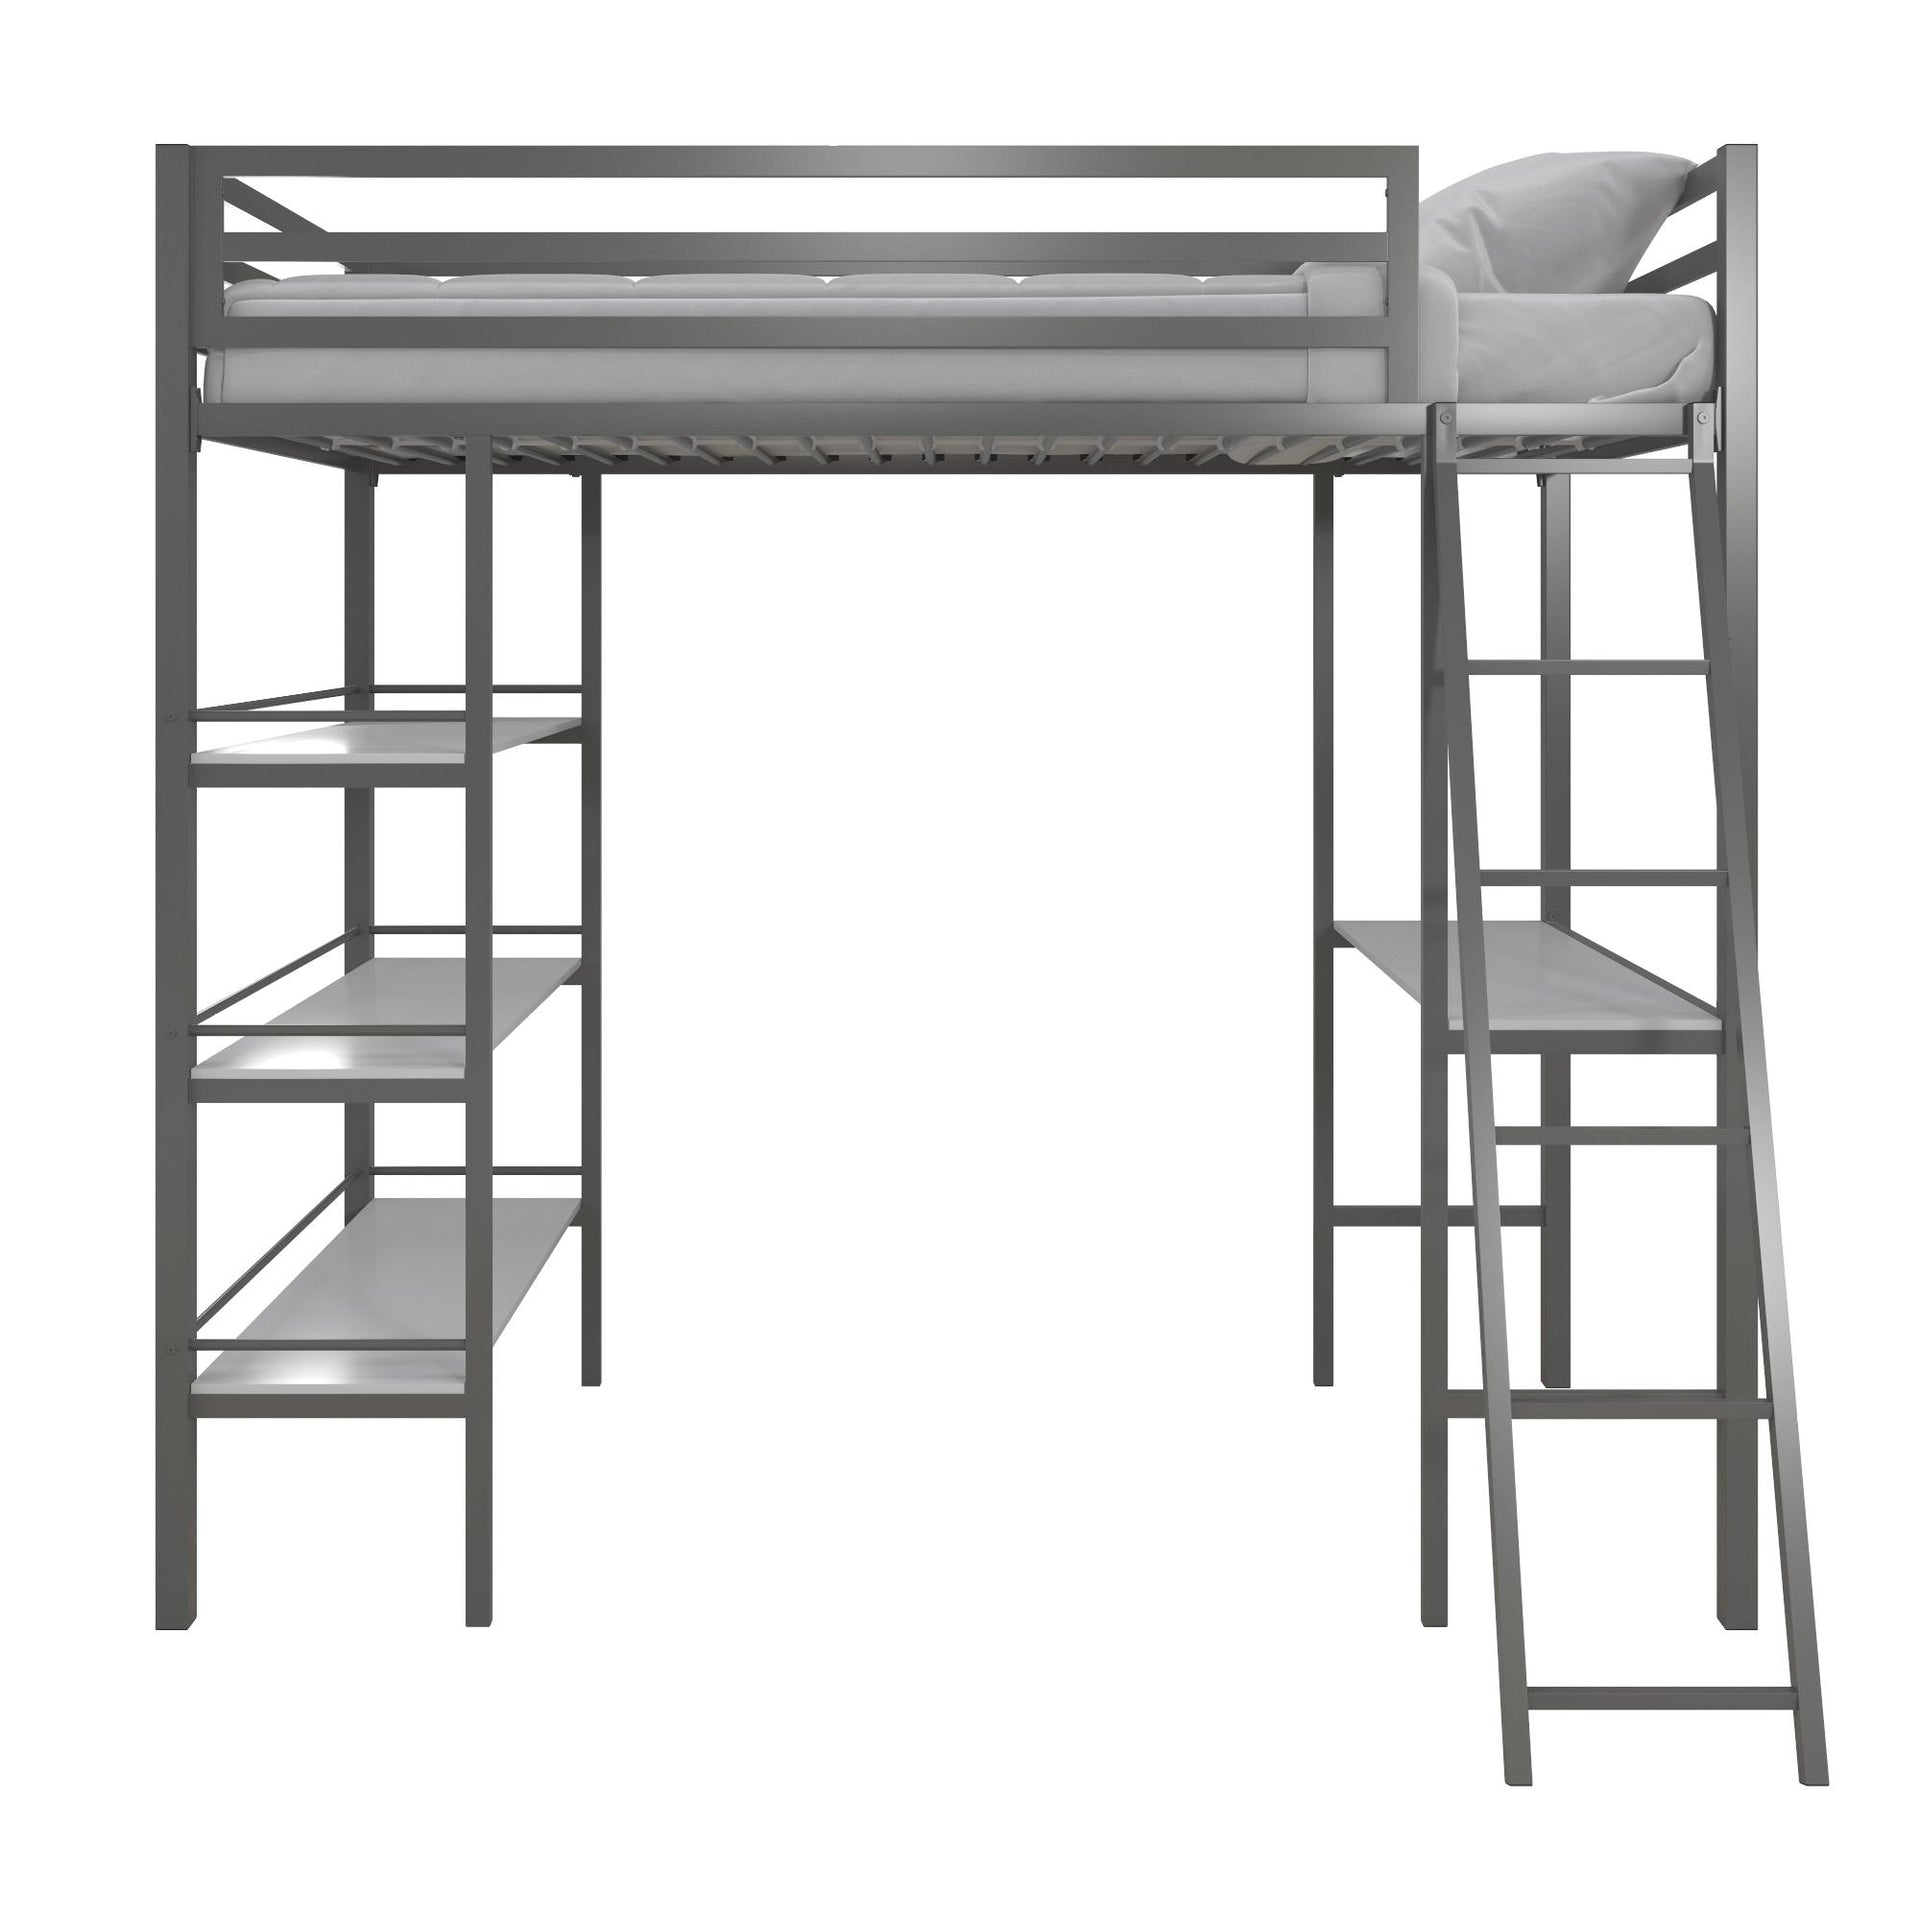 Little Seeds Birka Metal Loft Bed with Shelves - Gray - Twin